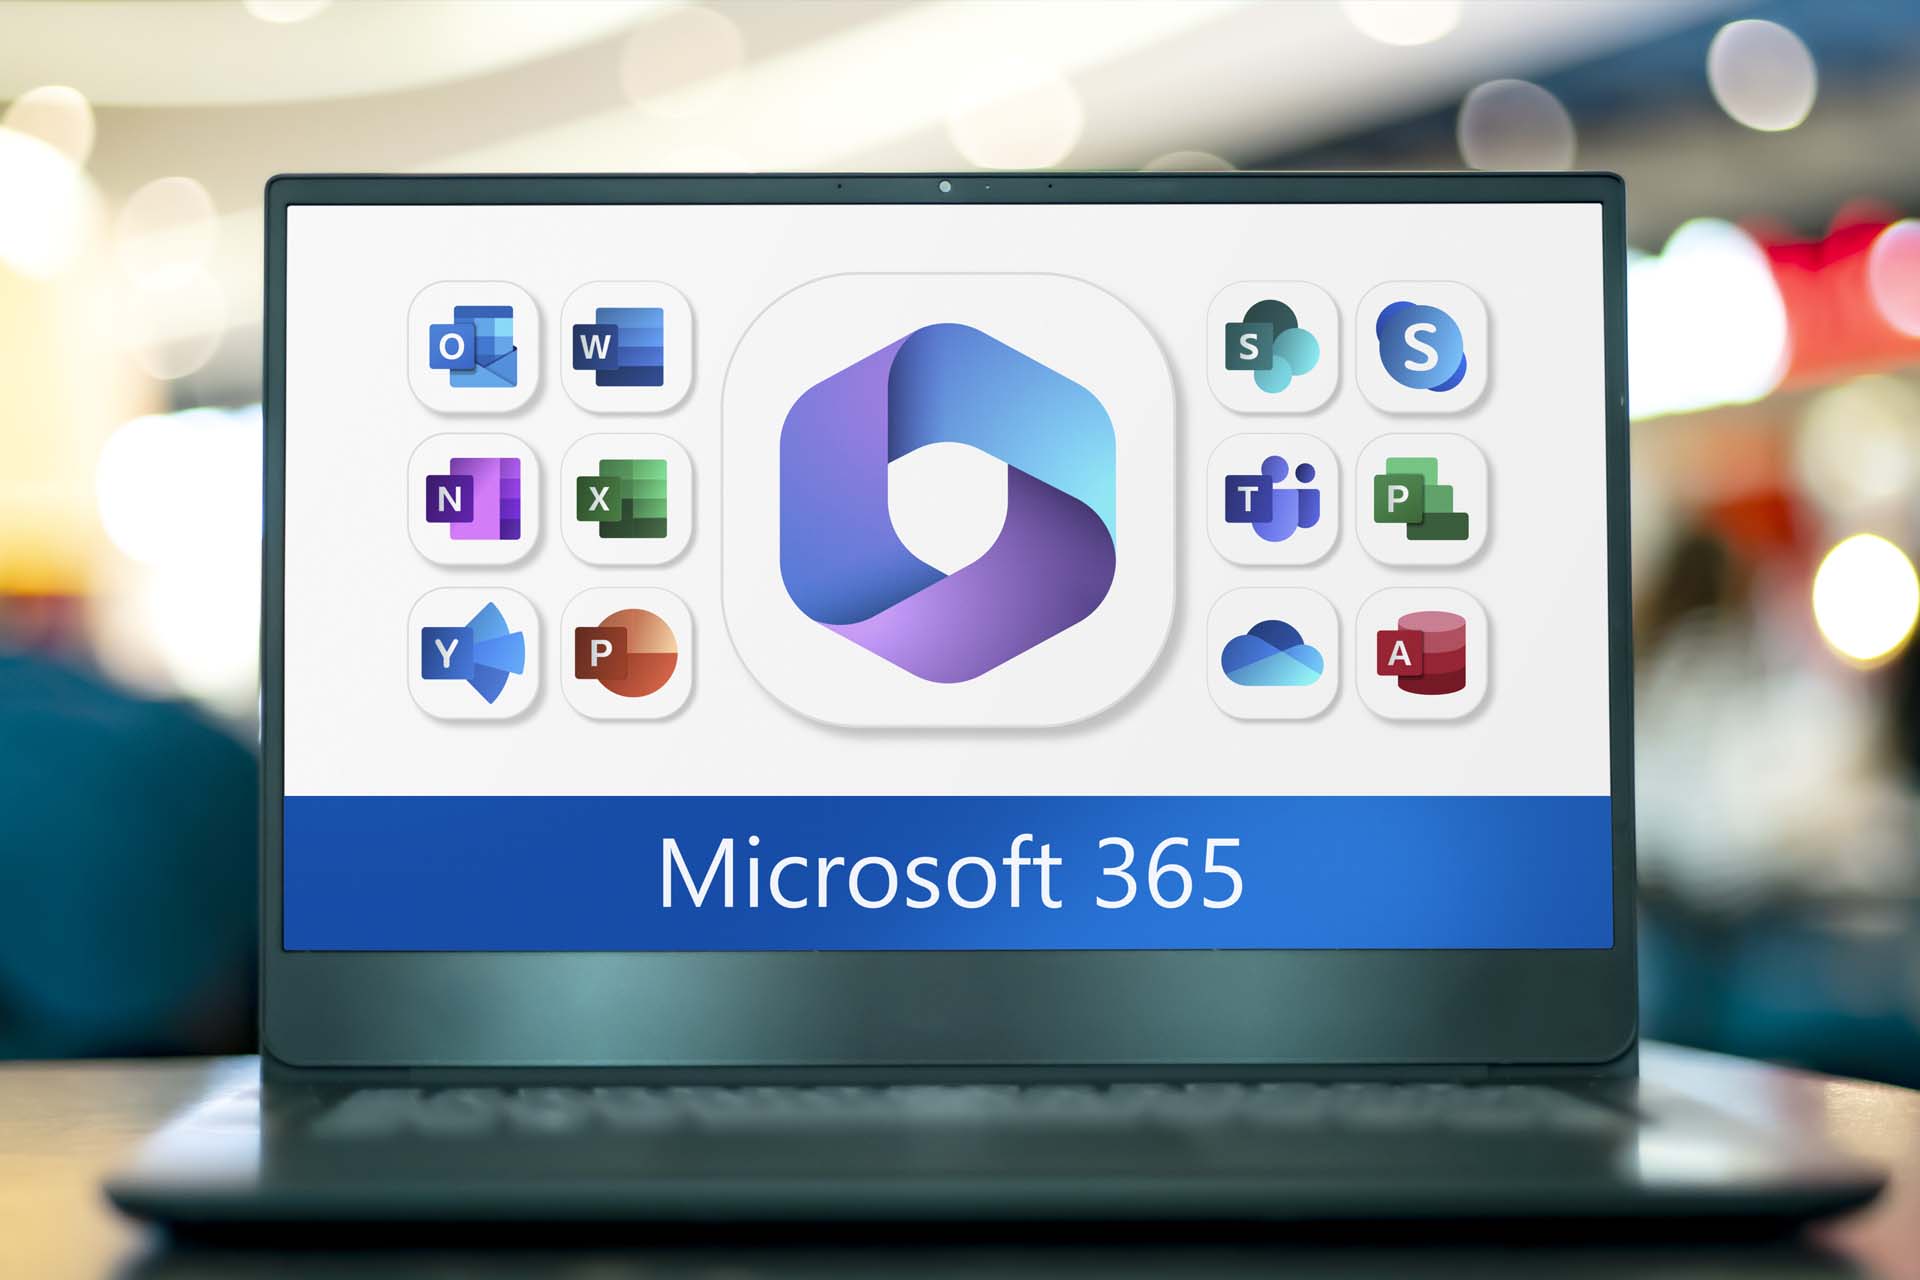 Microsoft M365